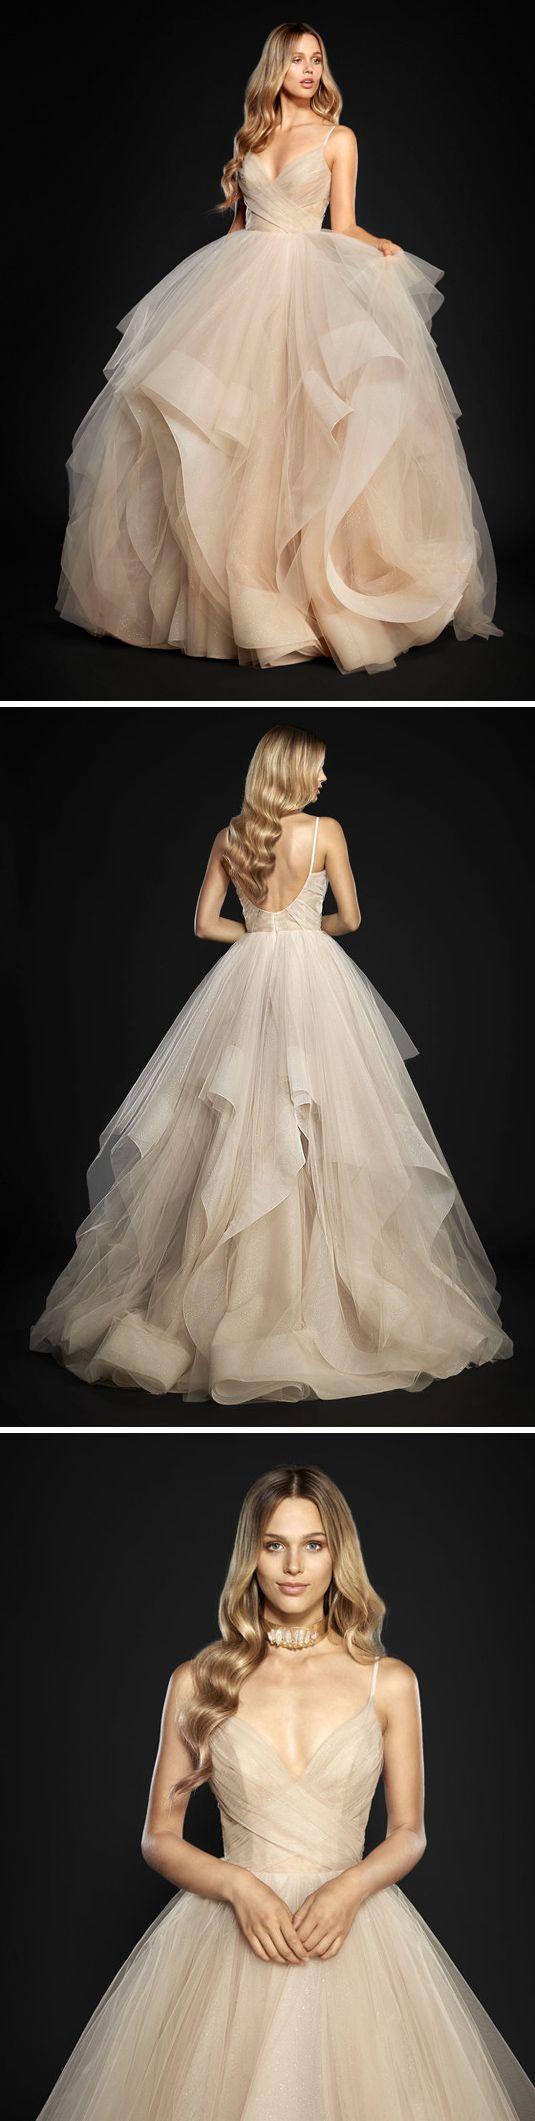 زفاف - Wedding Gowns And Dresses